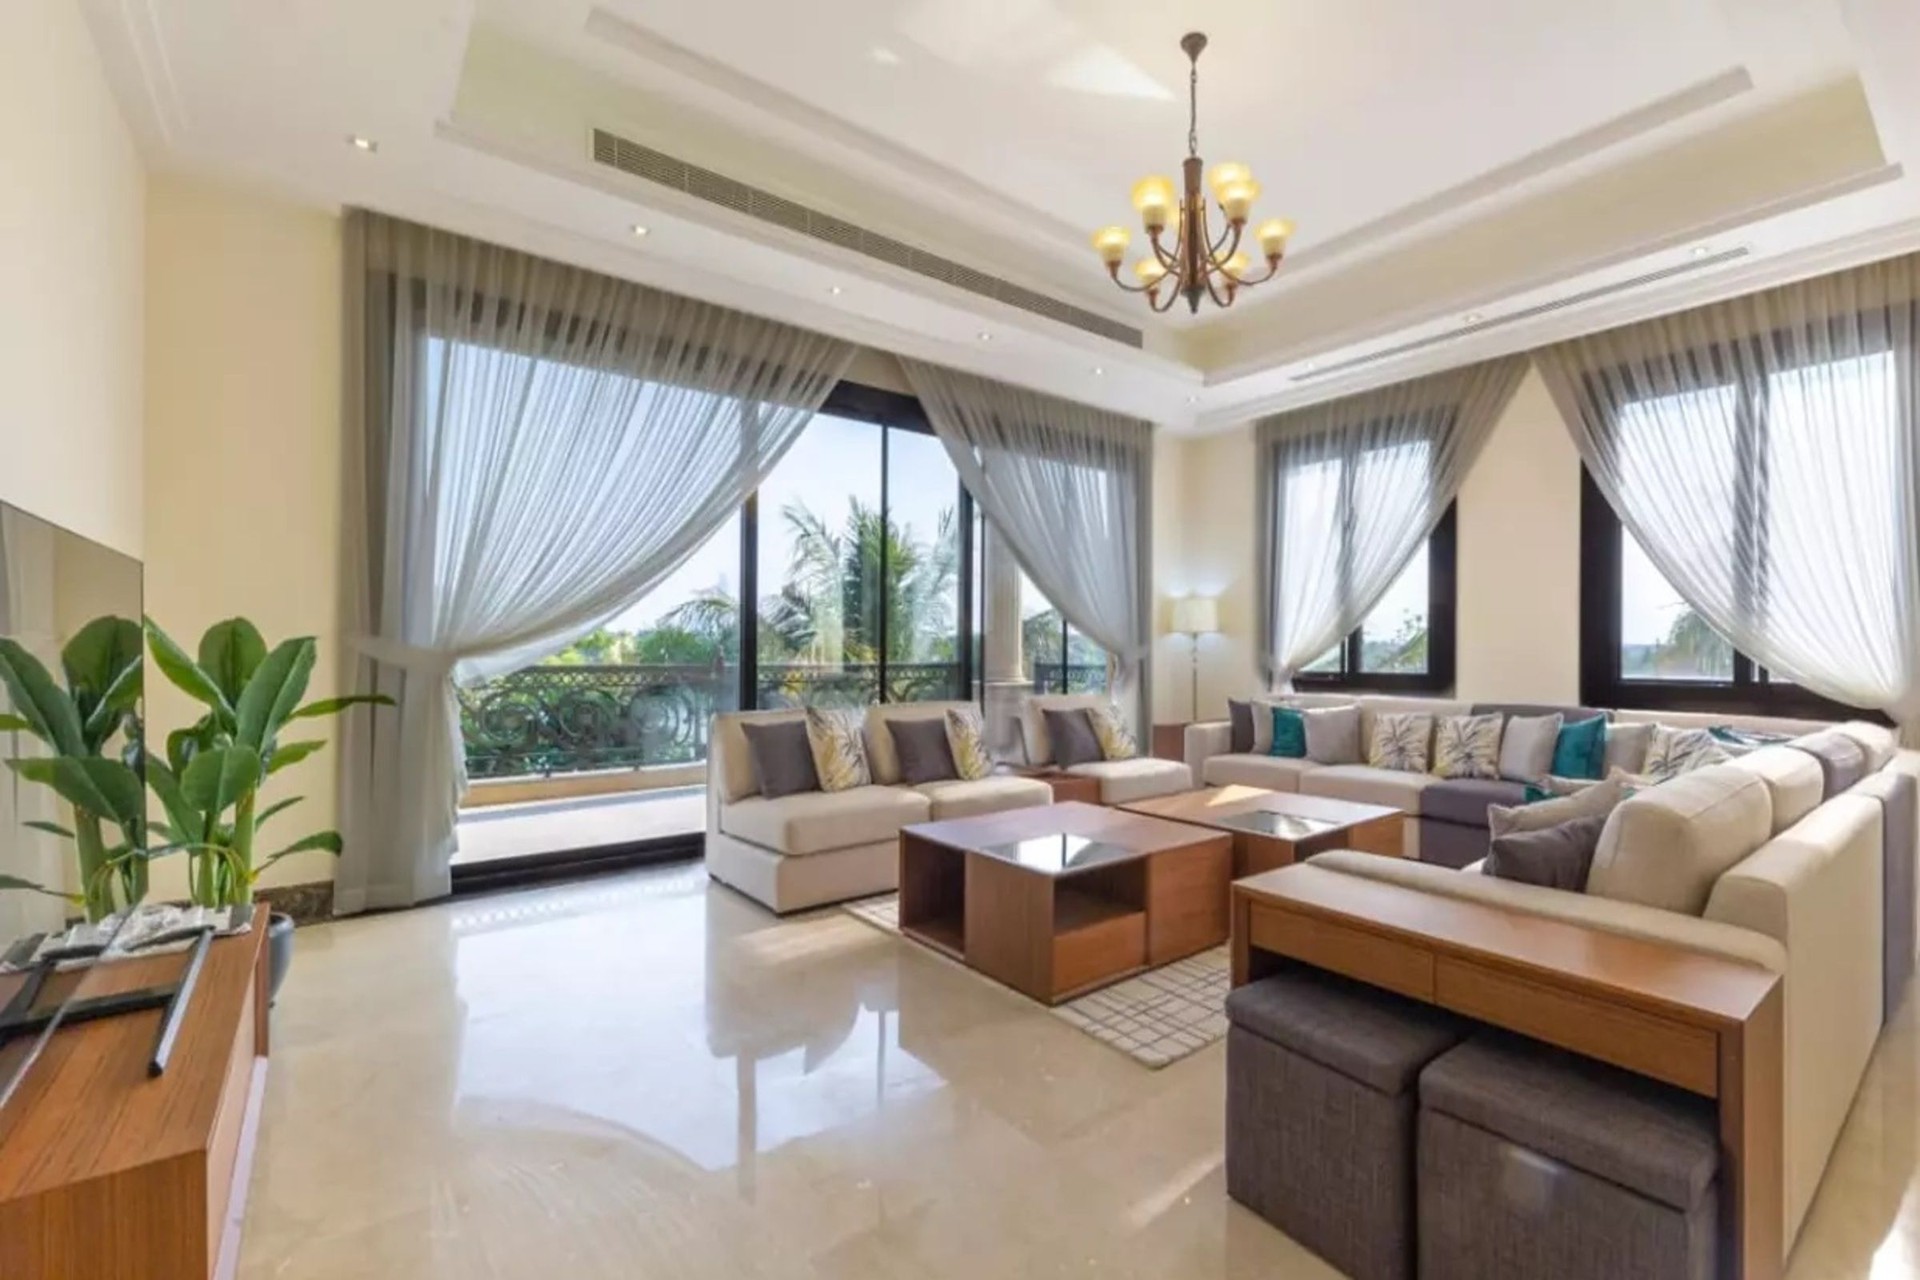 Lake View Luxury 6 Bedroom Villa in Emirates Hills: Image 1